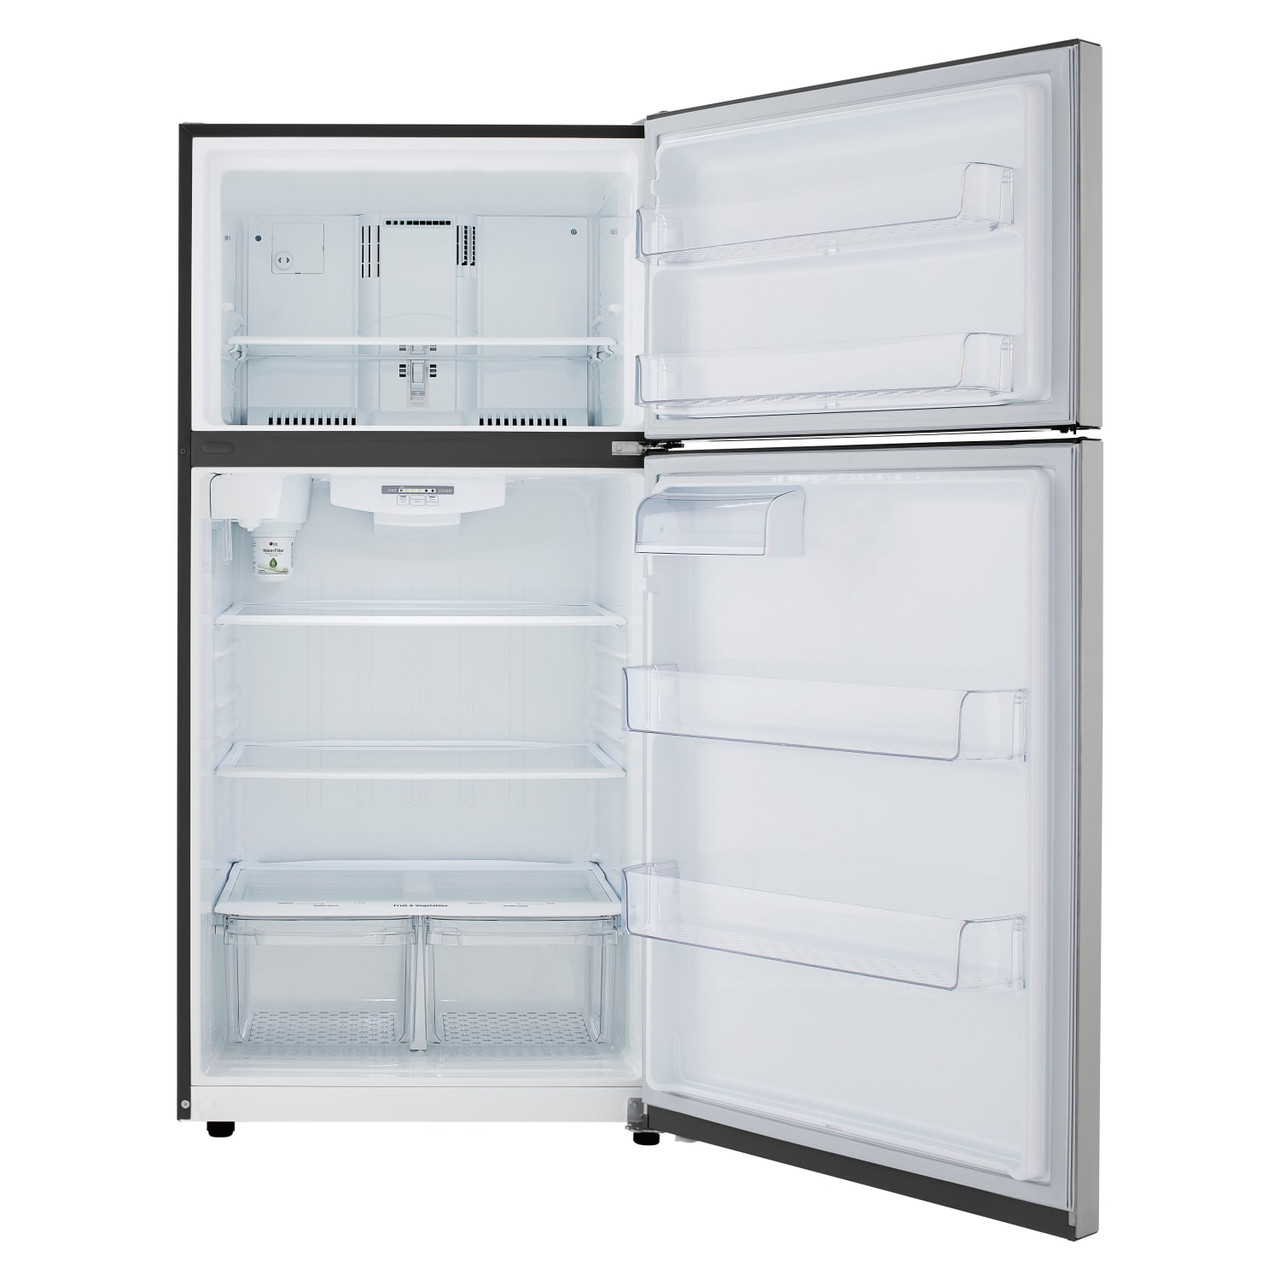 LG 24 cu. ft. Top Freezer Refrigerator - LRTLS2403S